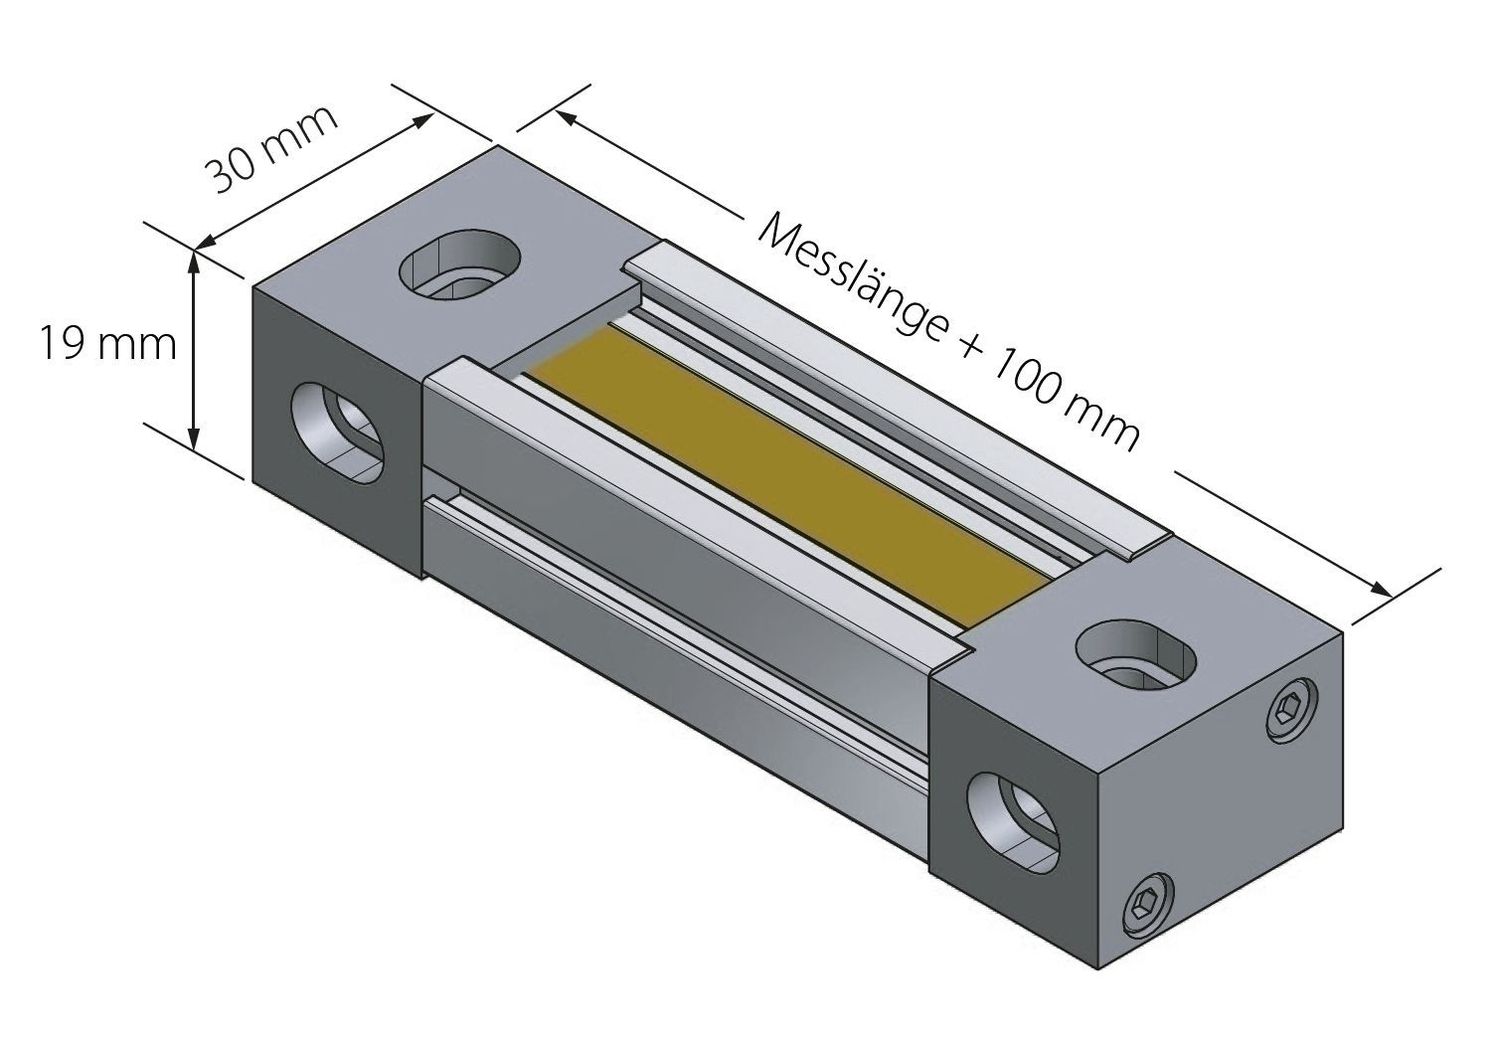 K+C Magnetmaßstab MS10A 1900 mm - 5 µm | Verfahrweg 1920 mm